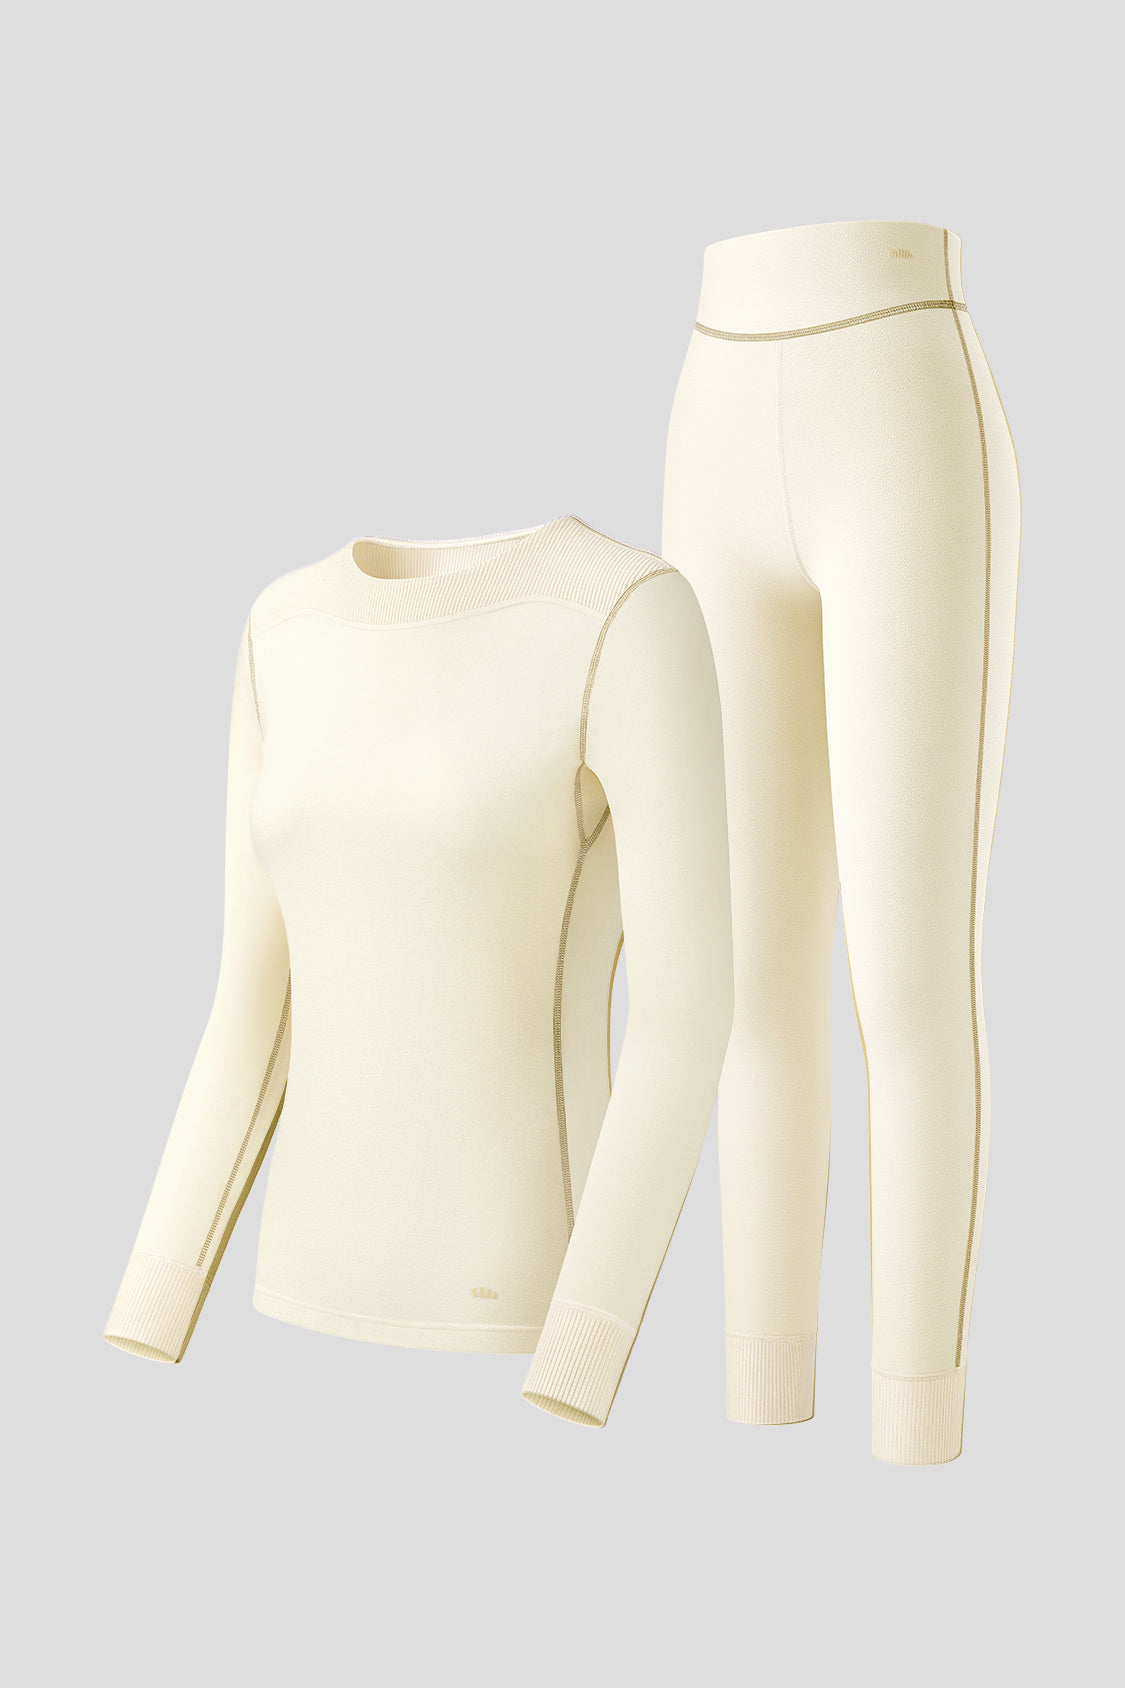 followme Buffalo Plaid 2 Piece Base Layer Thermal Underwear Set for Women  6372-10195-NEW-WHT-XL 